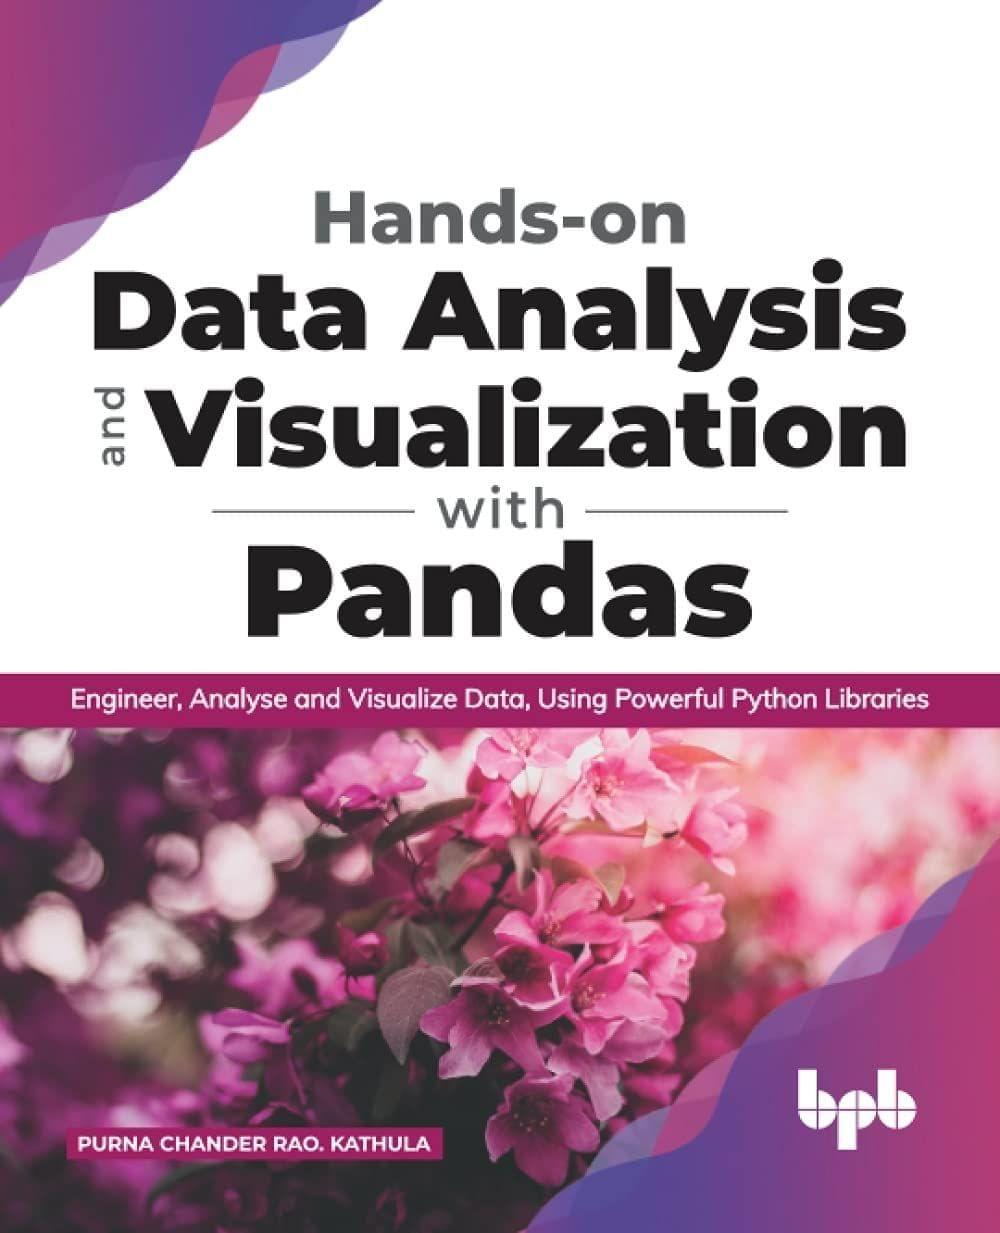 Hands-on Data Analysis & Visualization with Pandas [Paperback] PURNA CHANDER RAO. KATHULA